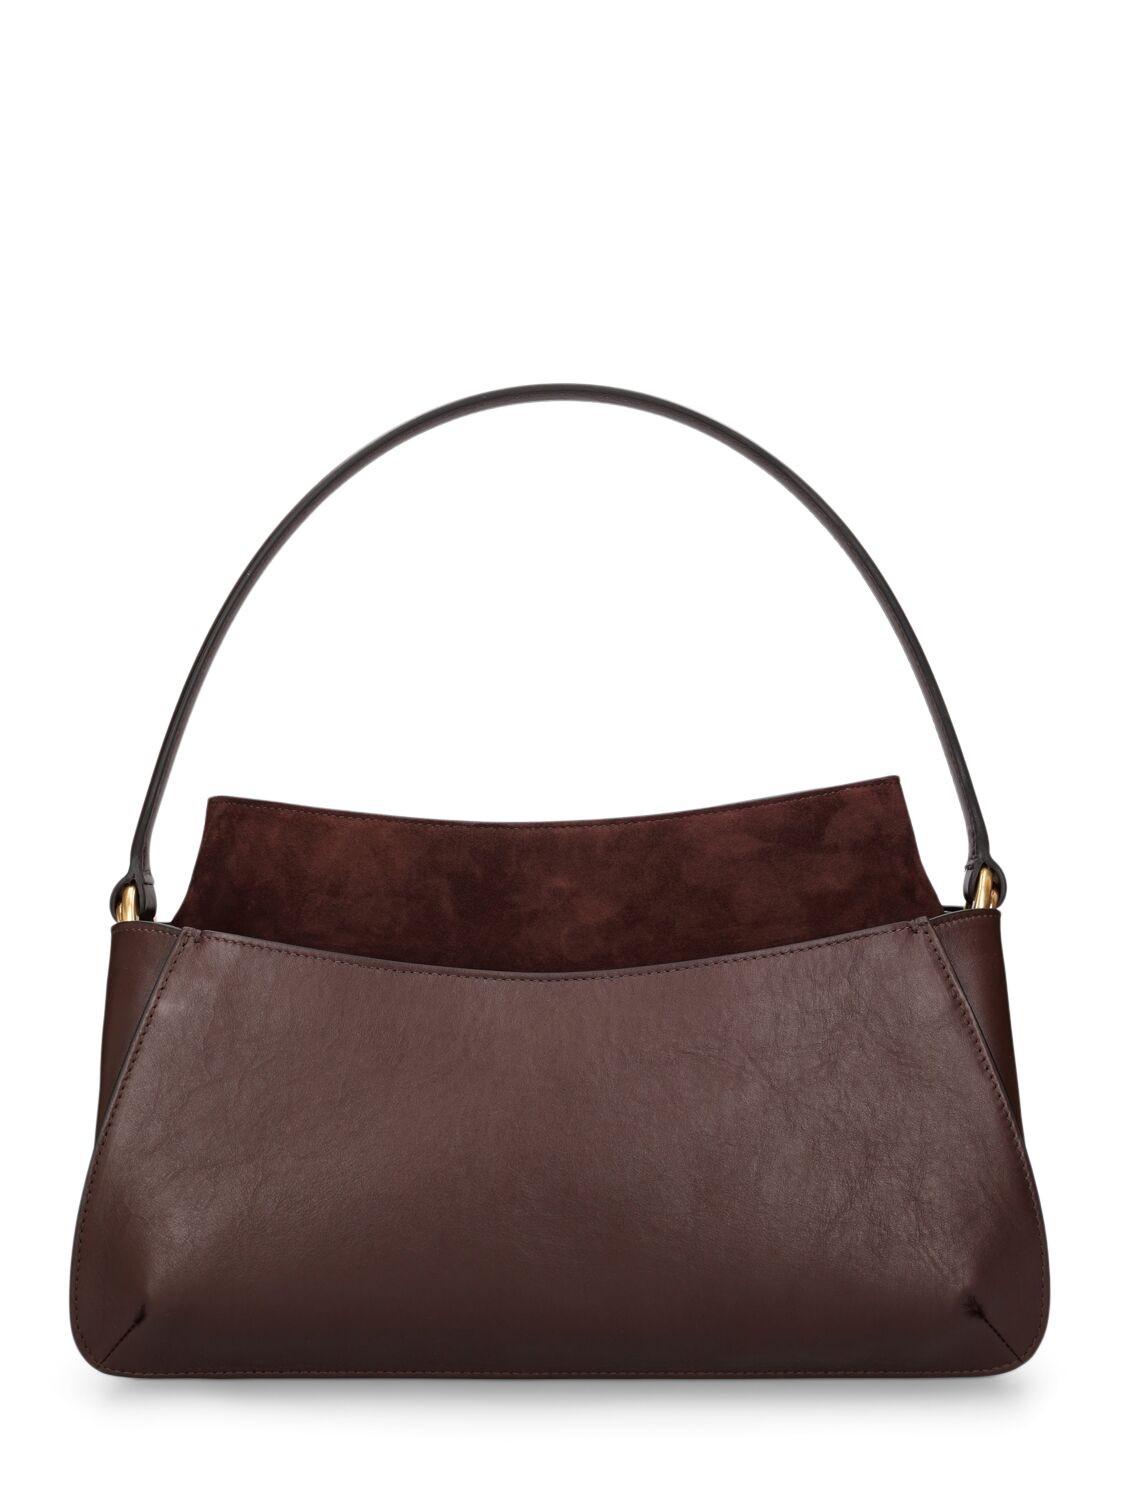 Shop Neous Erid Leather & Suede Shoulder Bag In Dark Chocolate